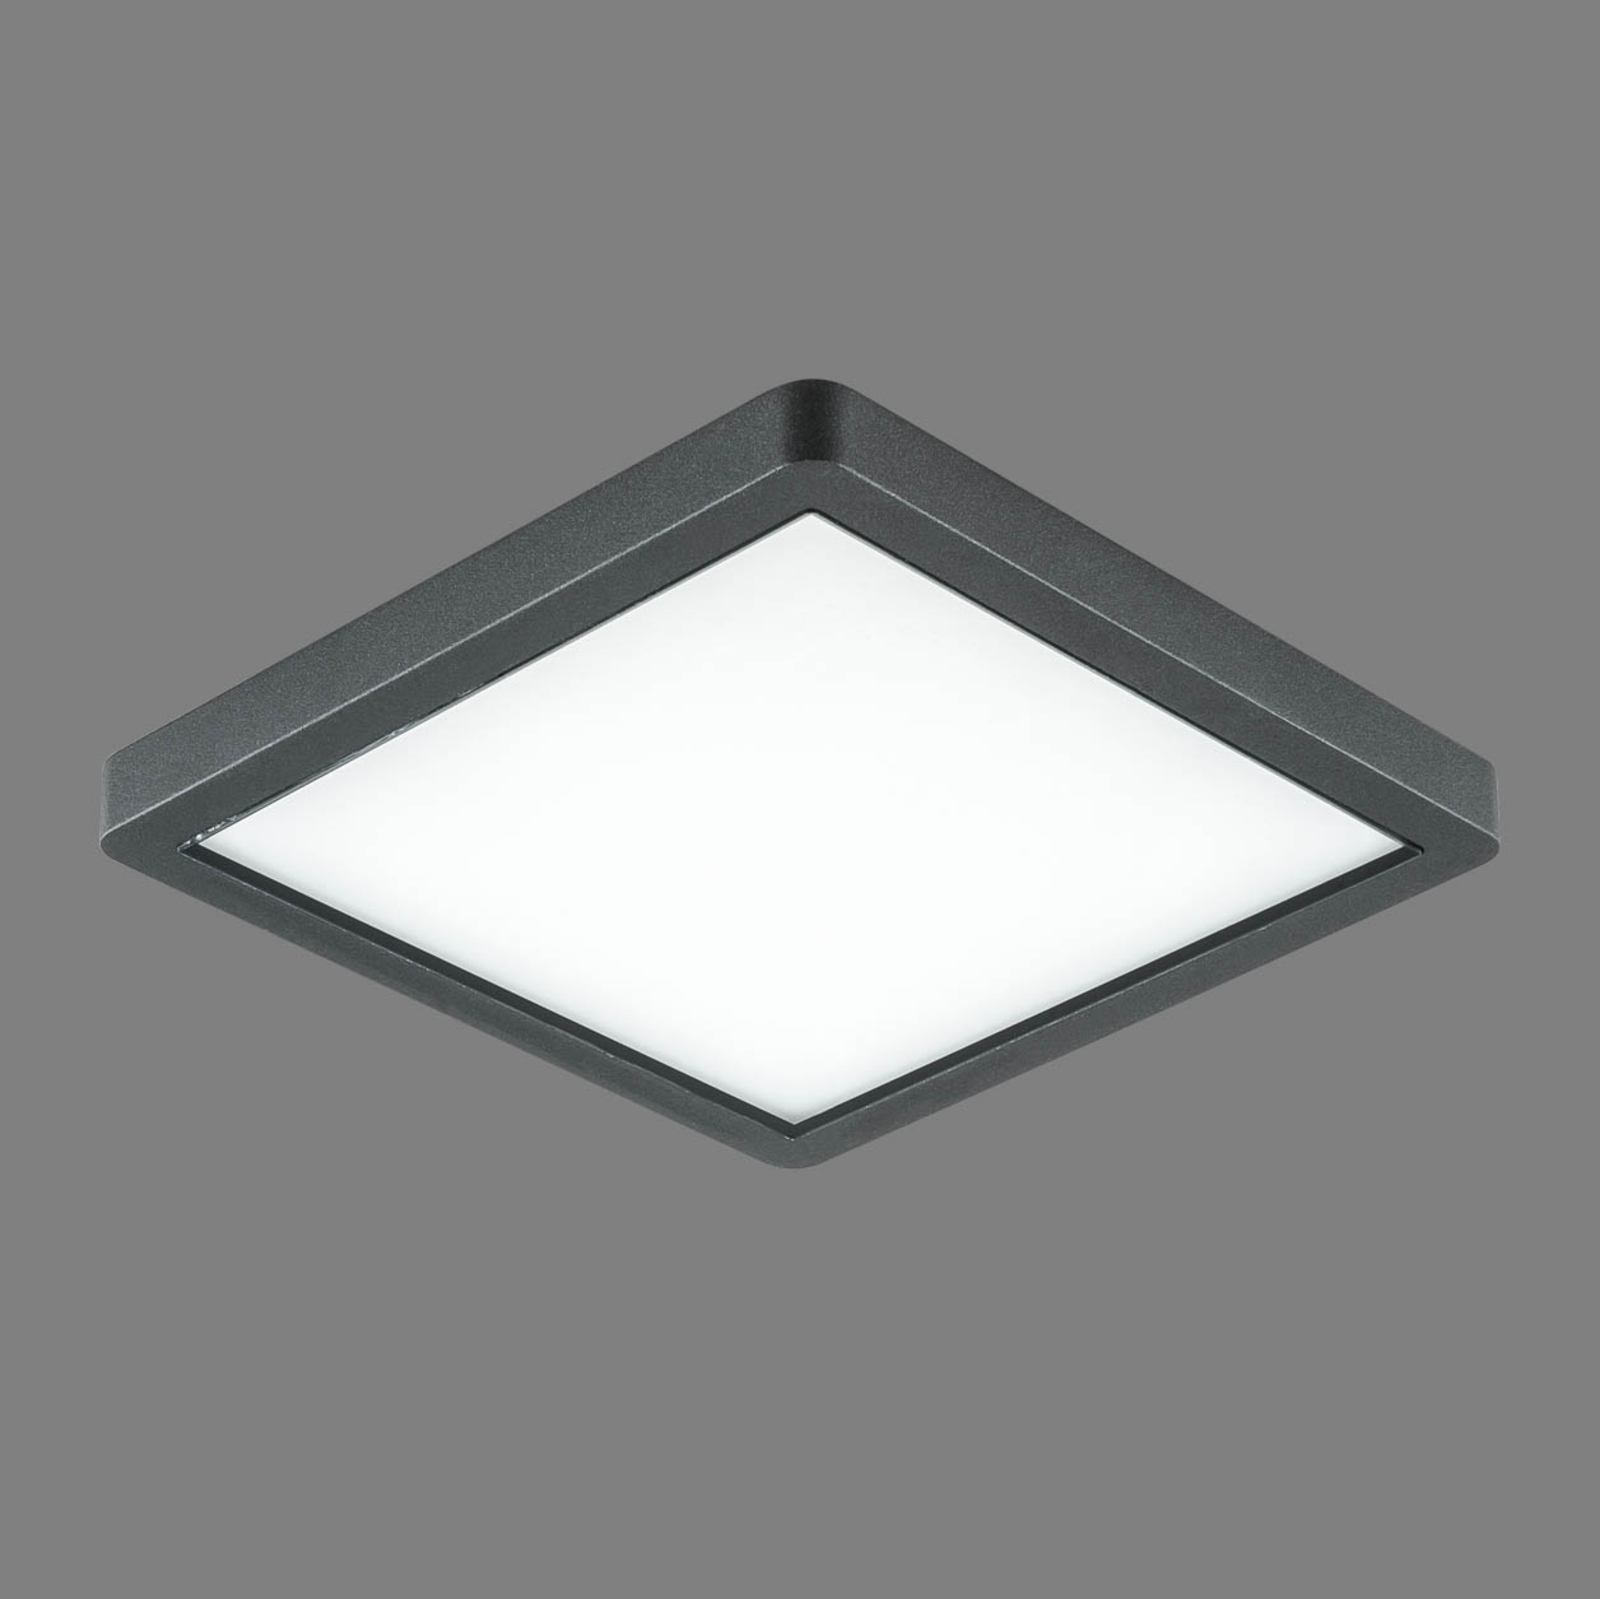 EVN Tectum LED outdoor ceiling light angular glass